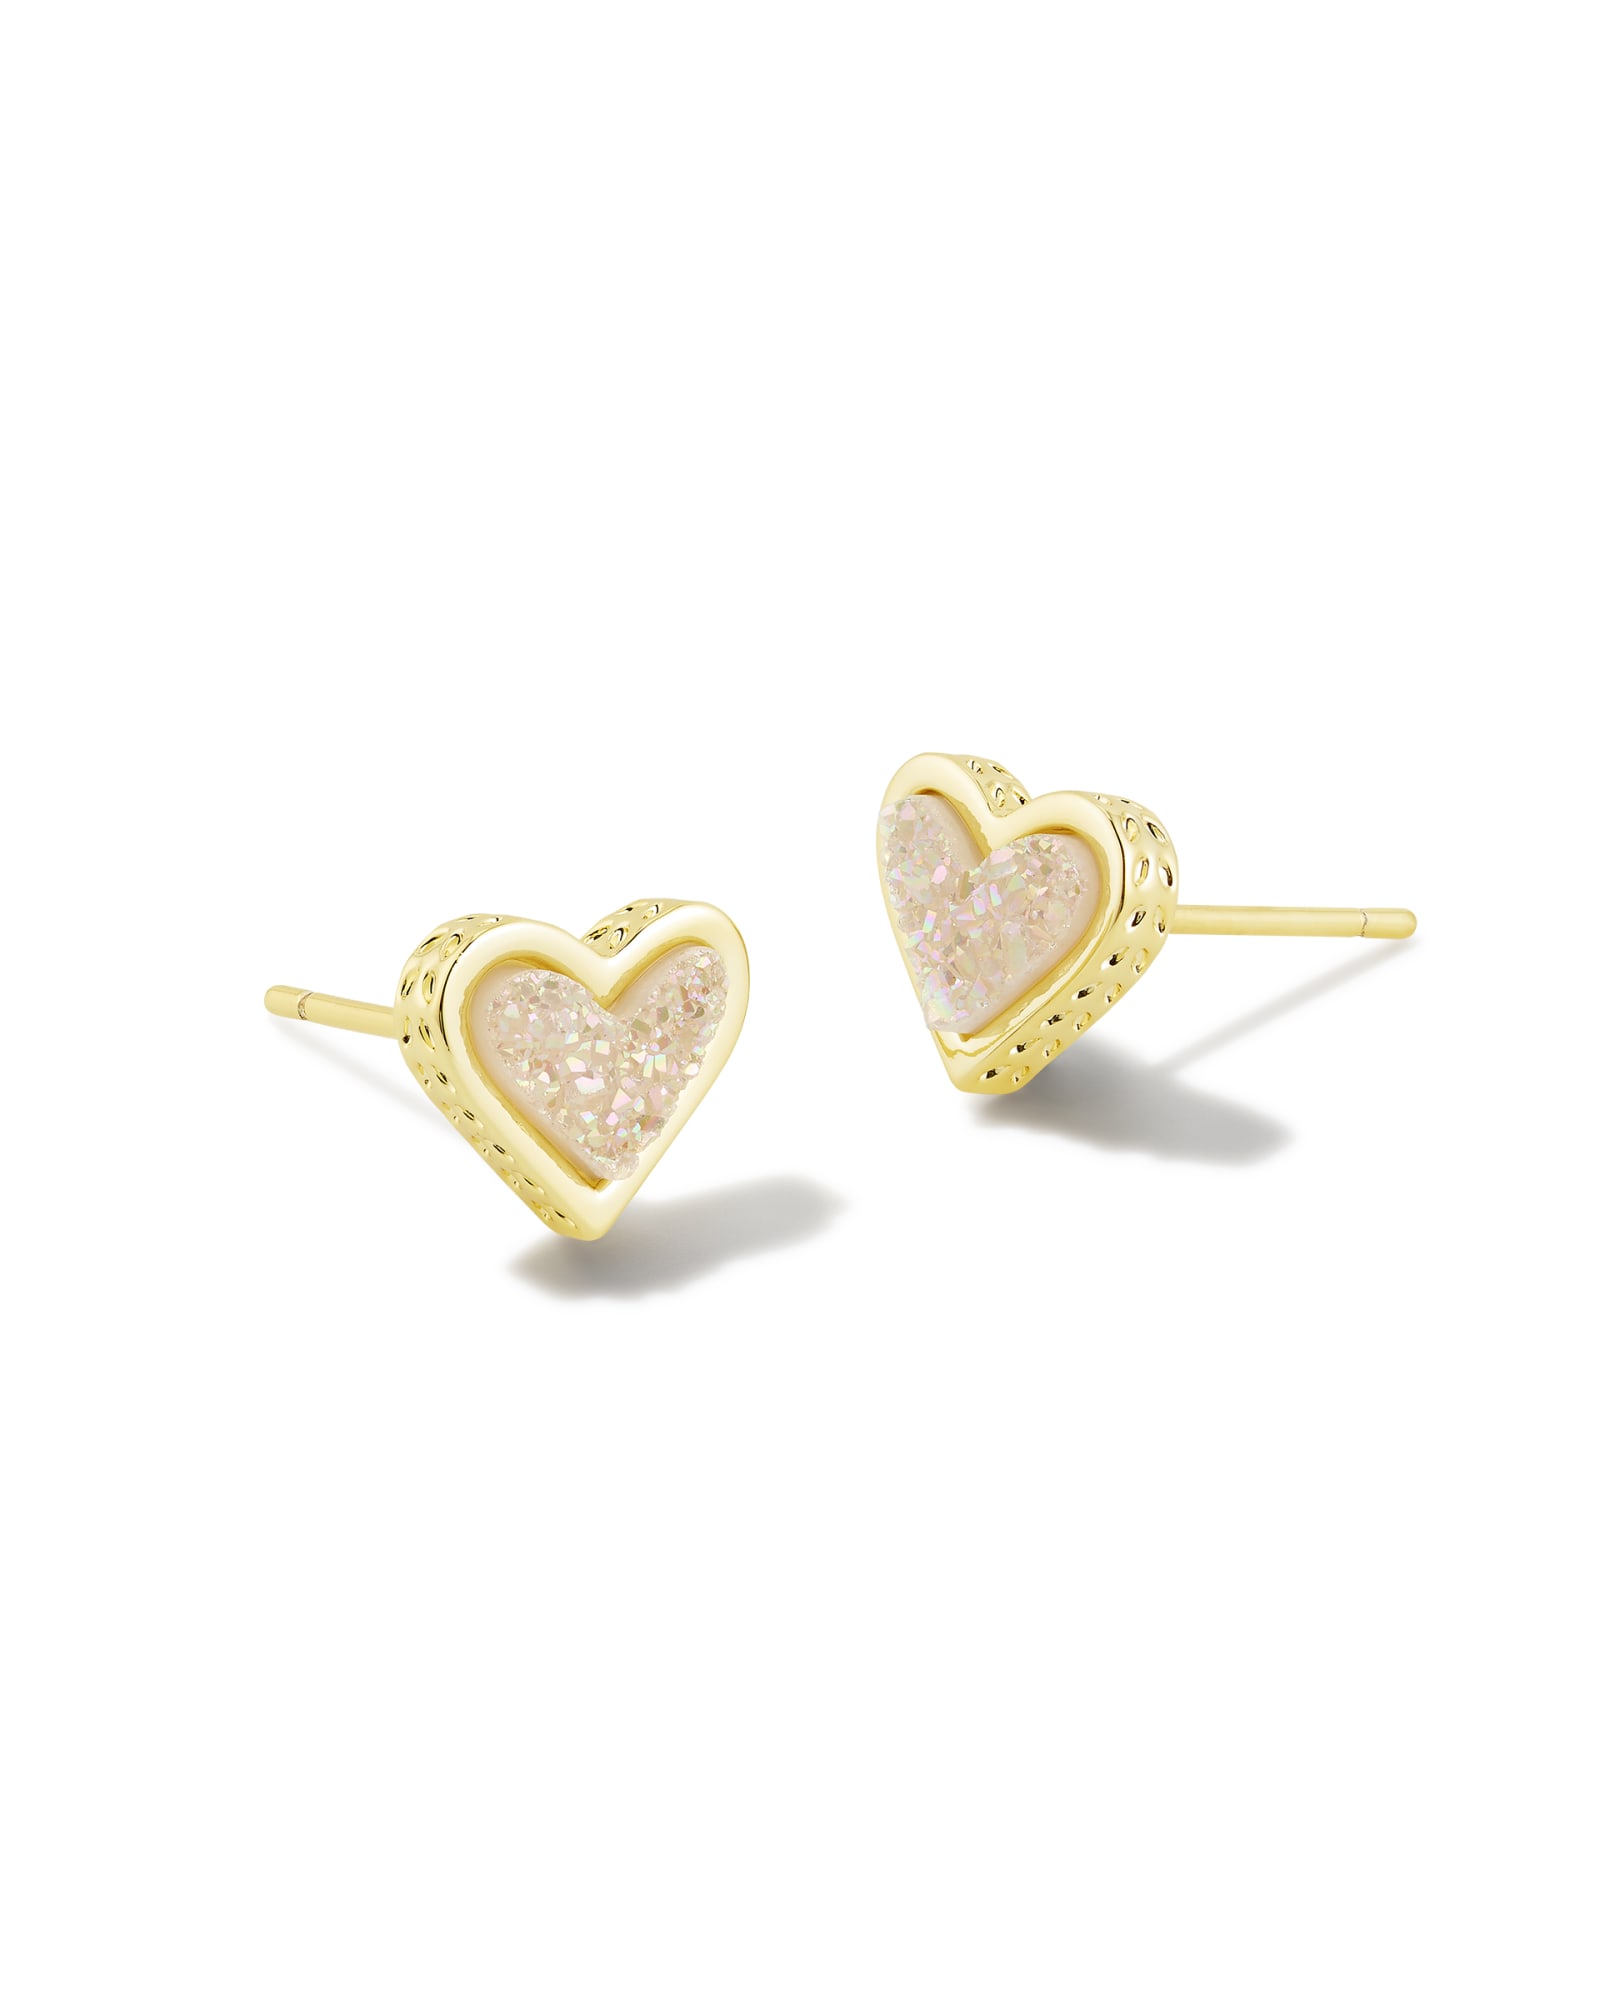 Ari Heart Rose Gold Drop Earrings in Pink Drusy